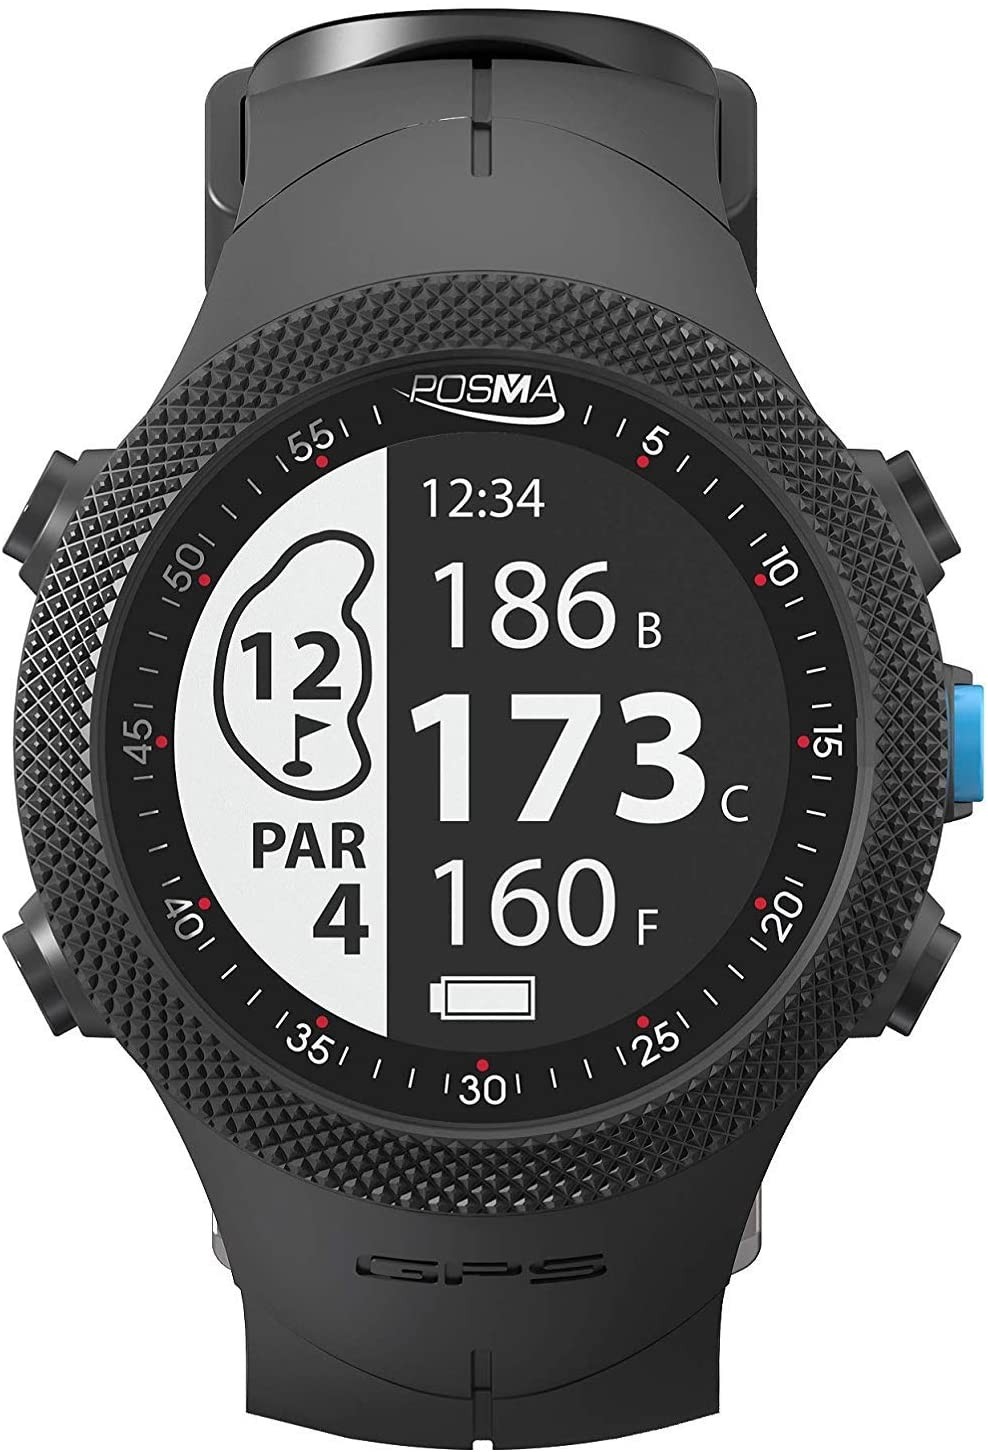 IDS Home Posma GB3 Golf Triathlon Sport GPS Watch Range Finder Smart GPS Watch for Running Cycling